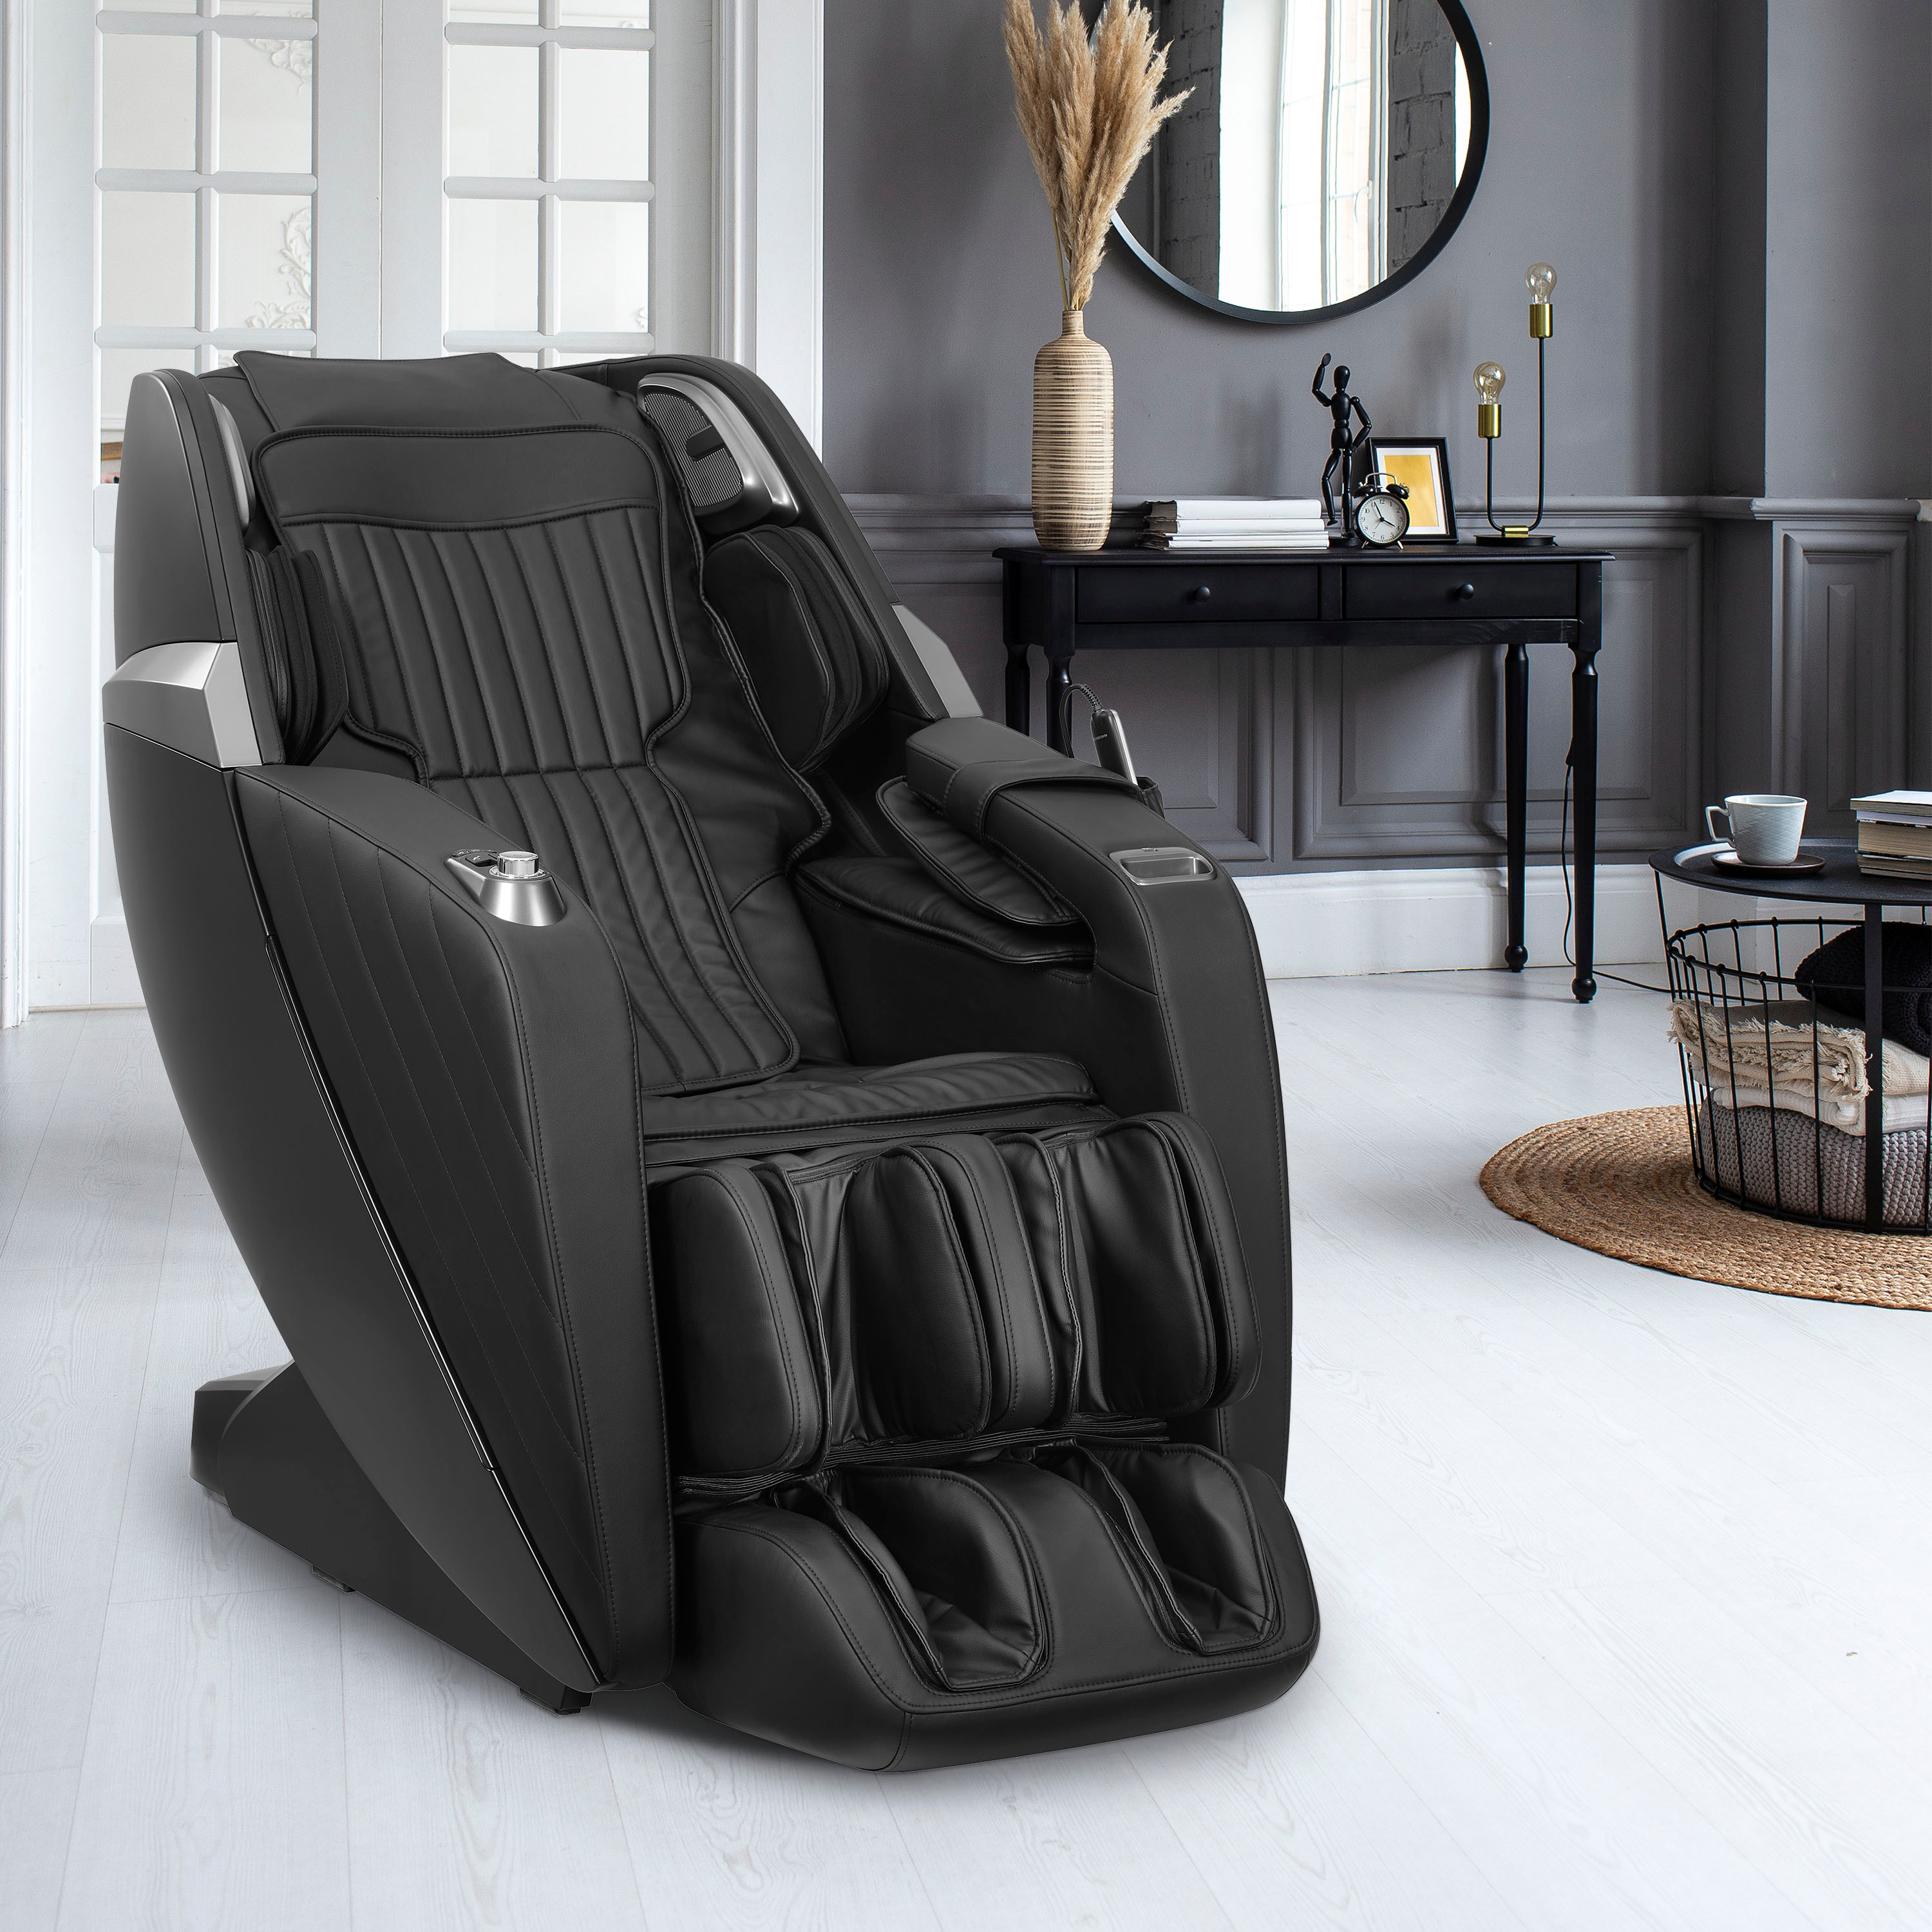 Insignia™ 3D Zero Gravity Full Body Massage Chair Black NS 